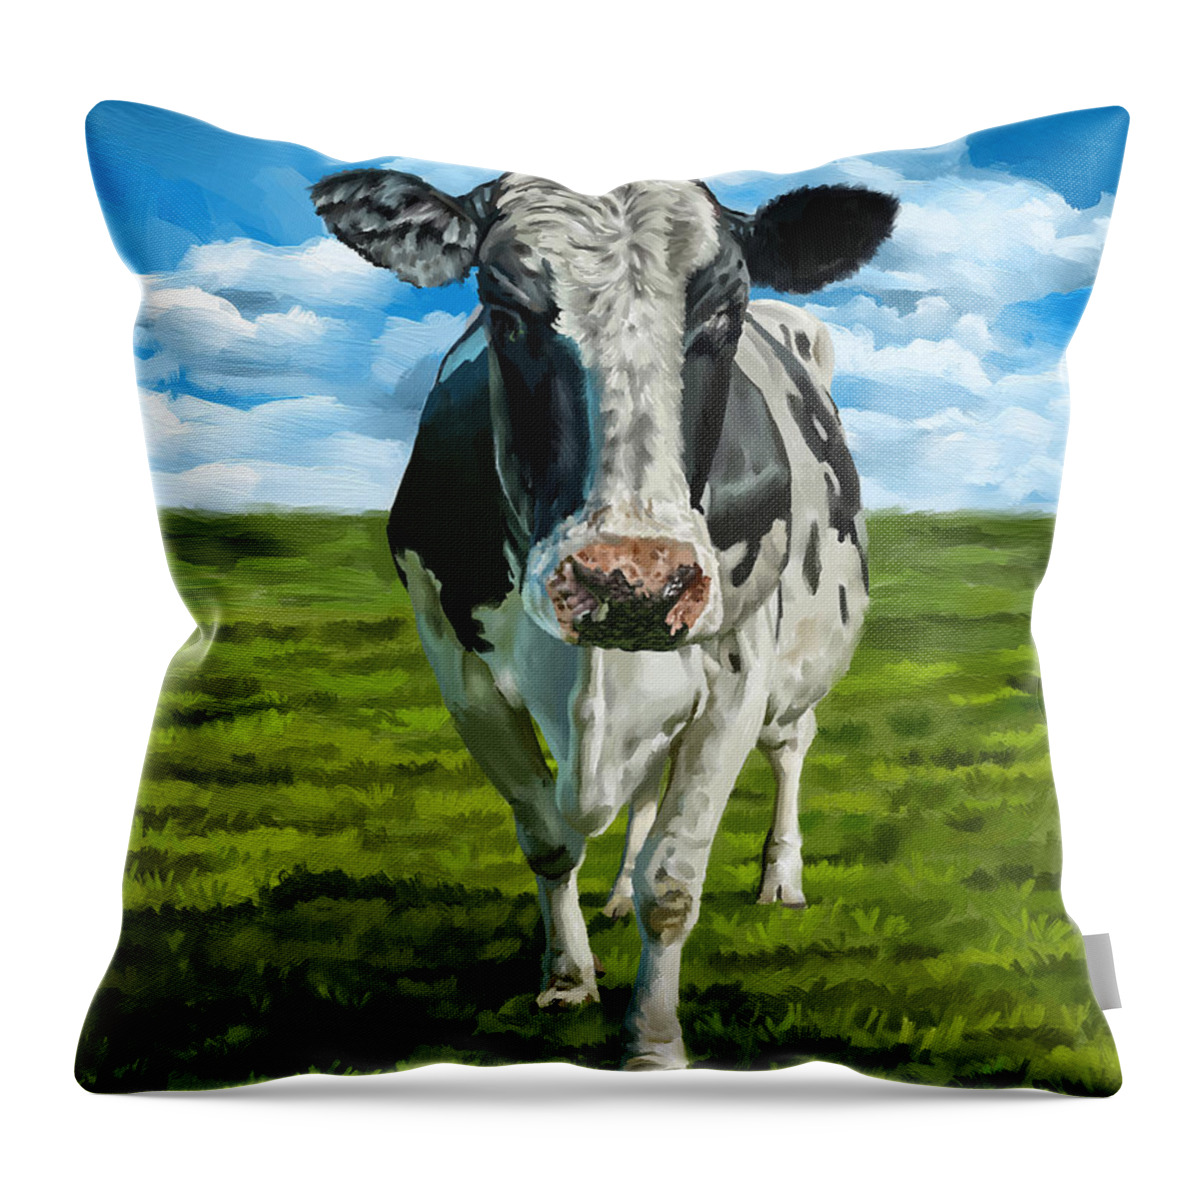 Farmhouse Throw Pillow featuring the digital art Blue Sky, Green Grass and a Cow - Farmhouse Painting by Shawn Conn